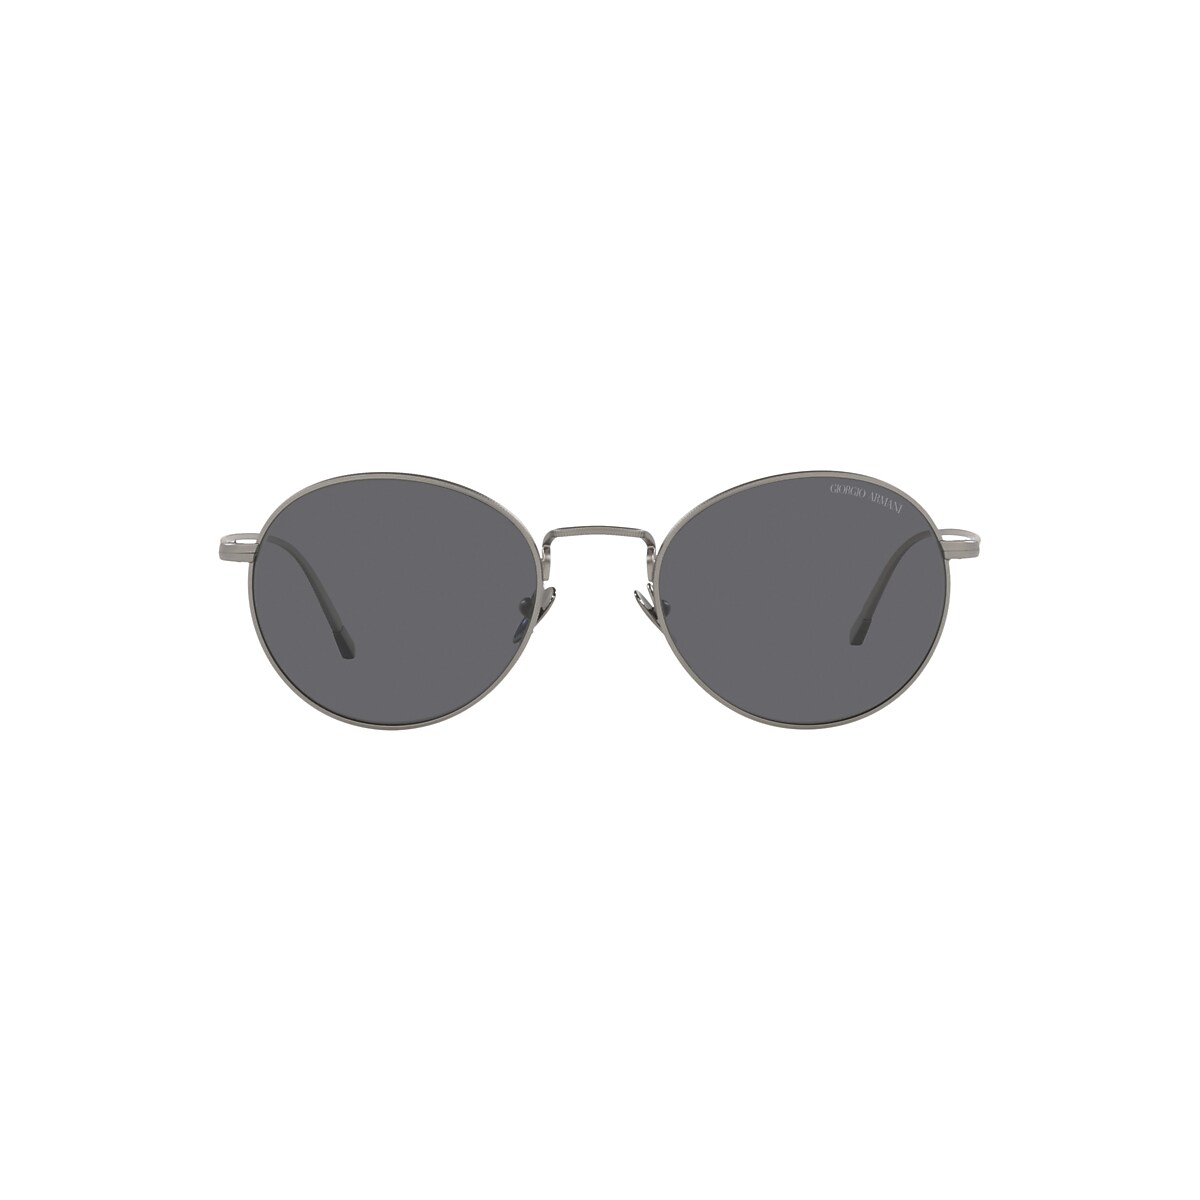 Giorgio Armani AR6125 52 Polar Grey & Matte Gunmetal Polarized Sunglasses |  Sunglass Hut USA